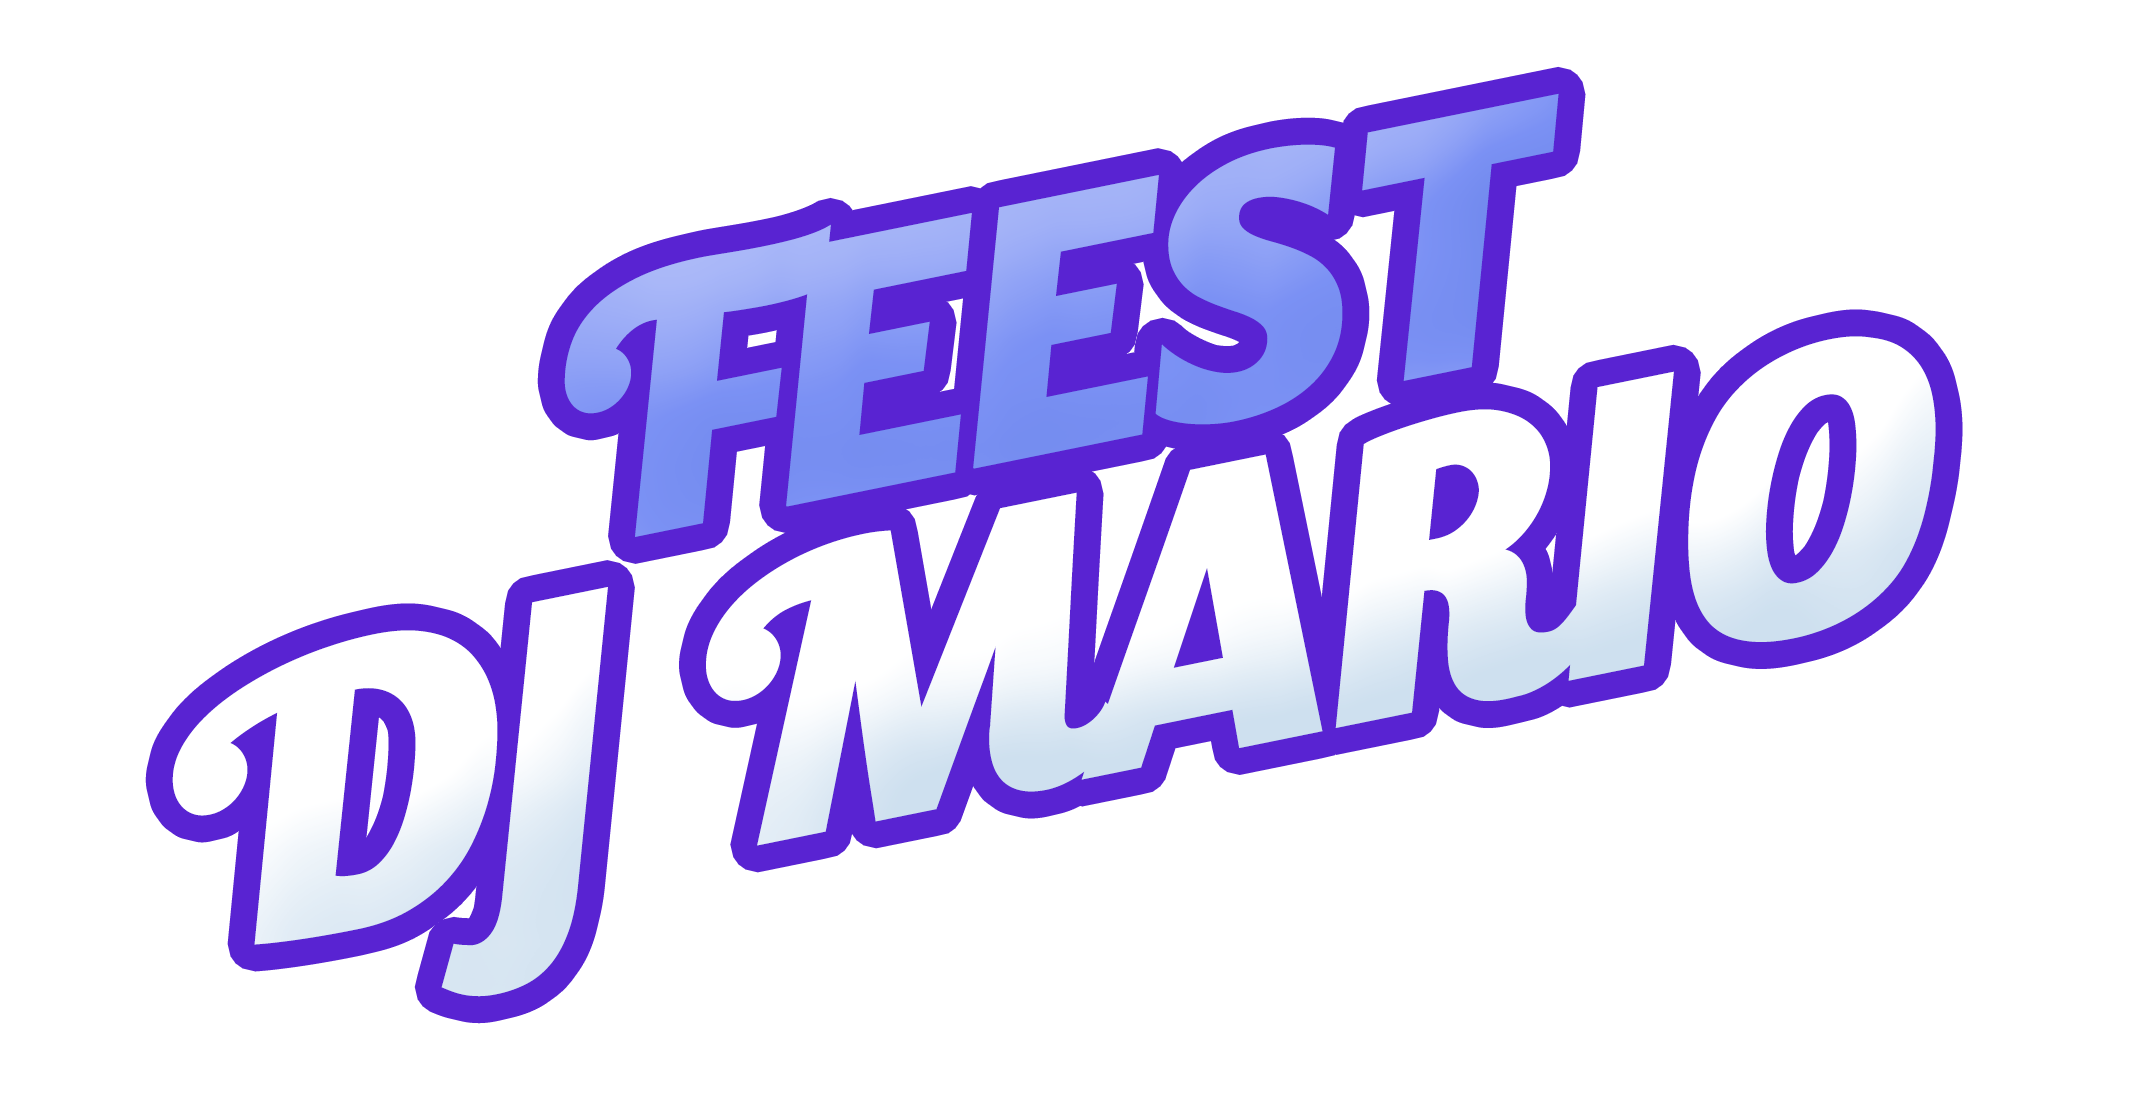 Feest DJ Mario